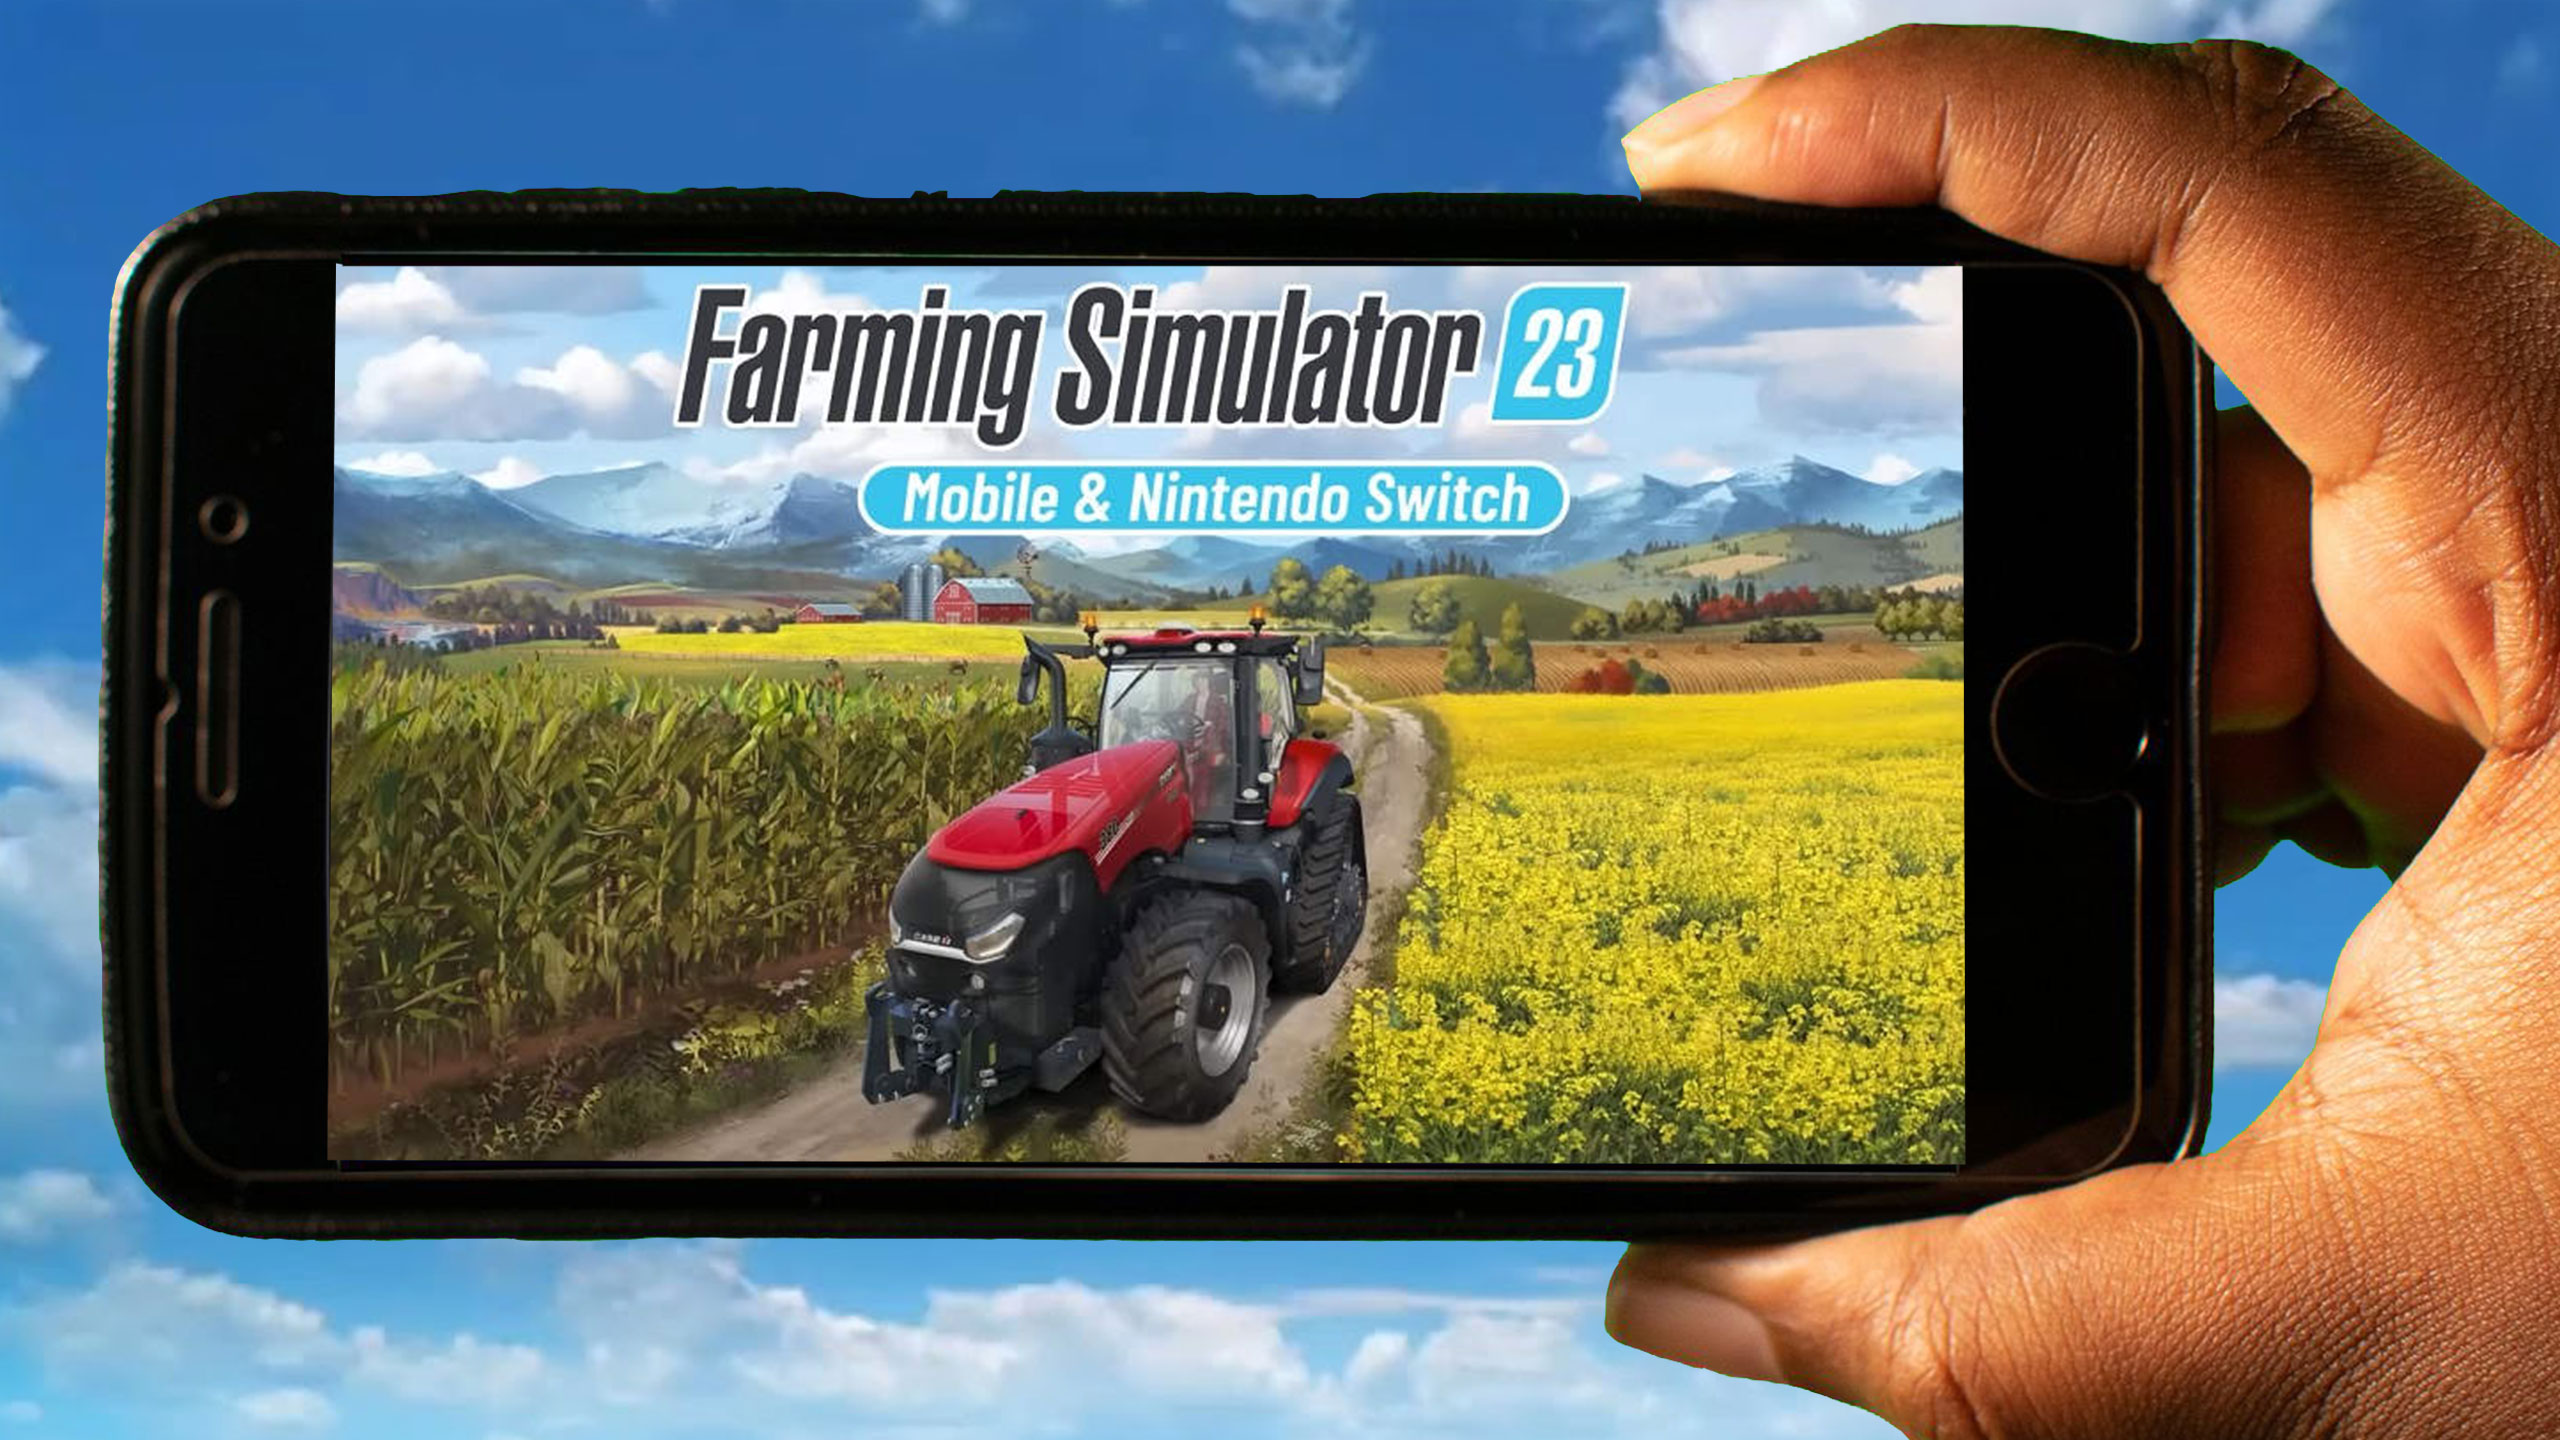 Farming simulator 23, Official trailer